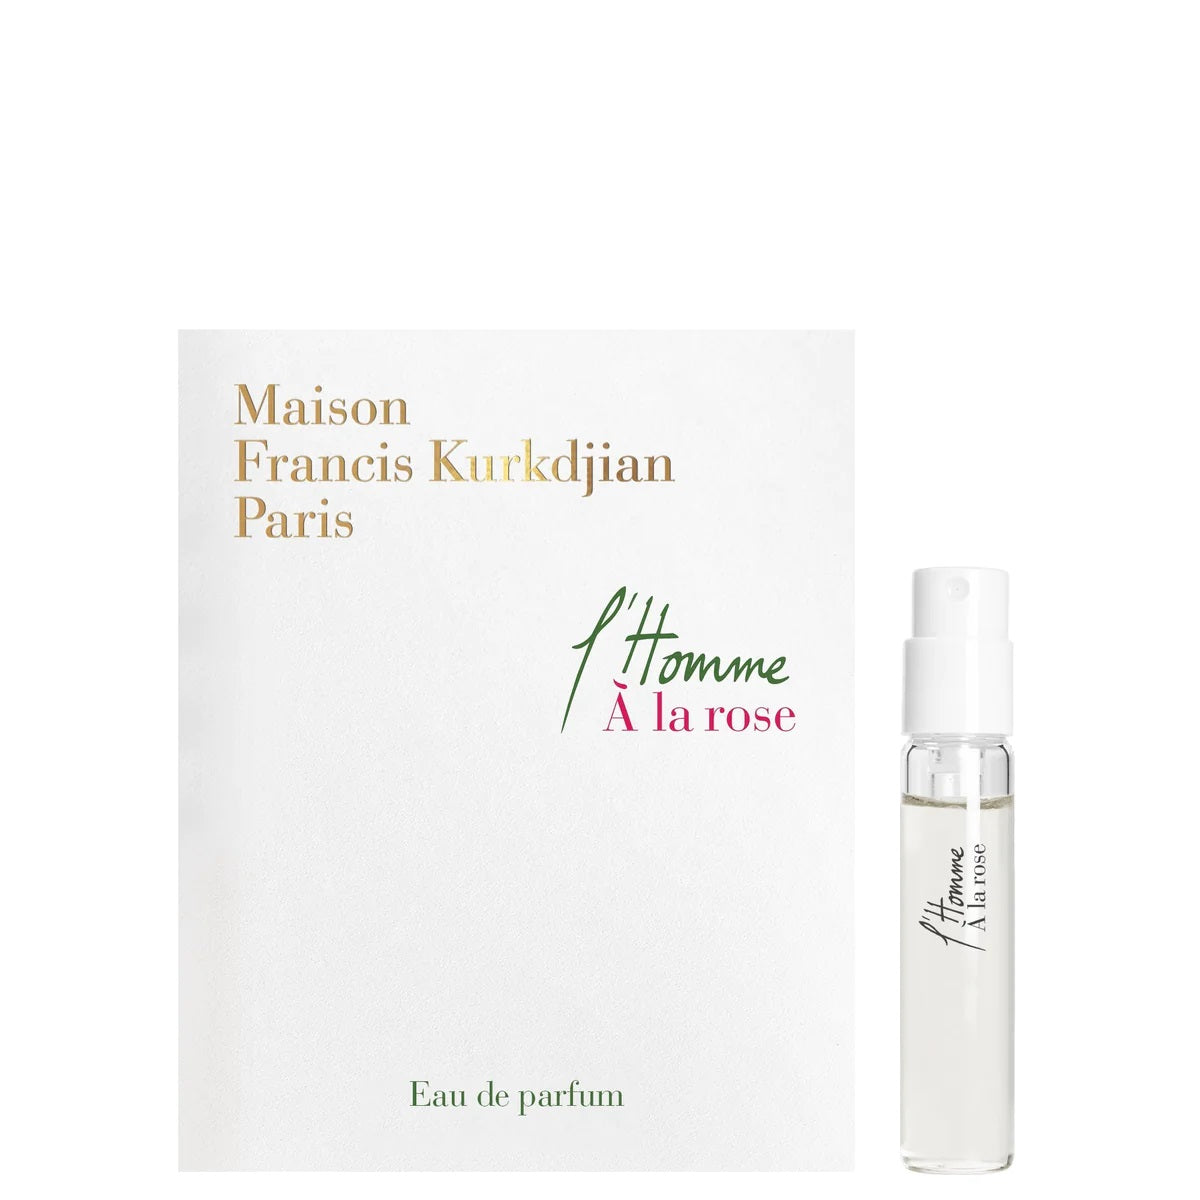 Maison Francis Kurkdjian L'Homme A la Rose 2ml 0.06 fl. oz. official fragrance samples